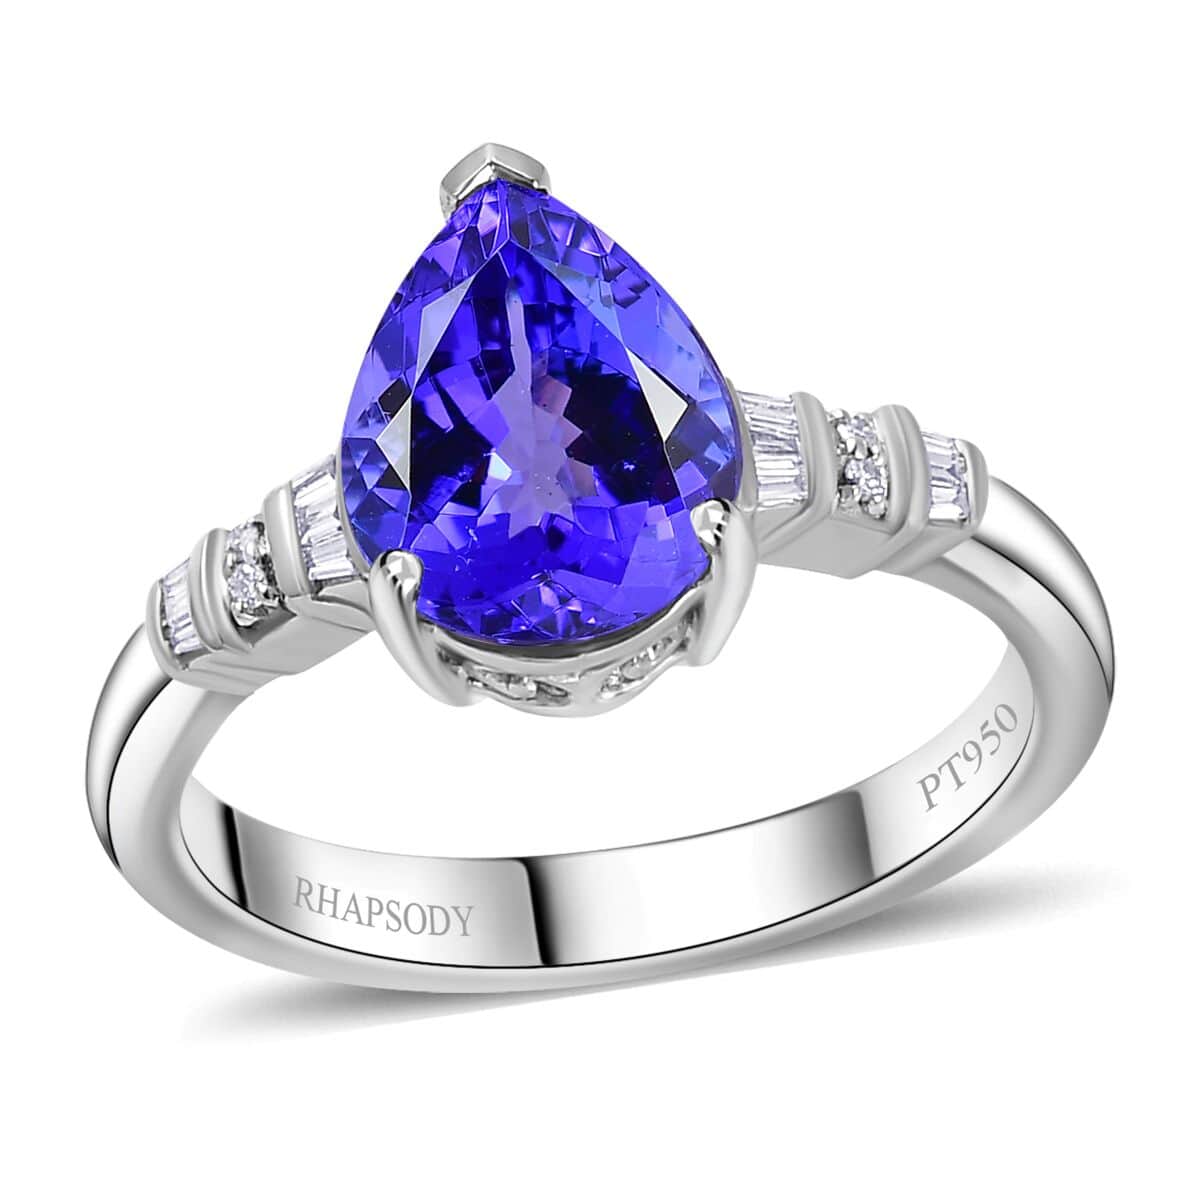 Rhapsody 950 Platinum AAAA Tanzanite and E-F VS Diamond Statement Ring (Size 8.0) 6.10 Grams 2.70 ctw image number 0